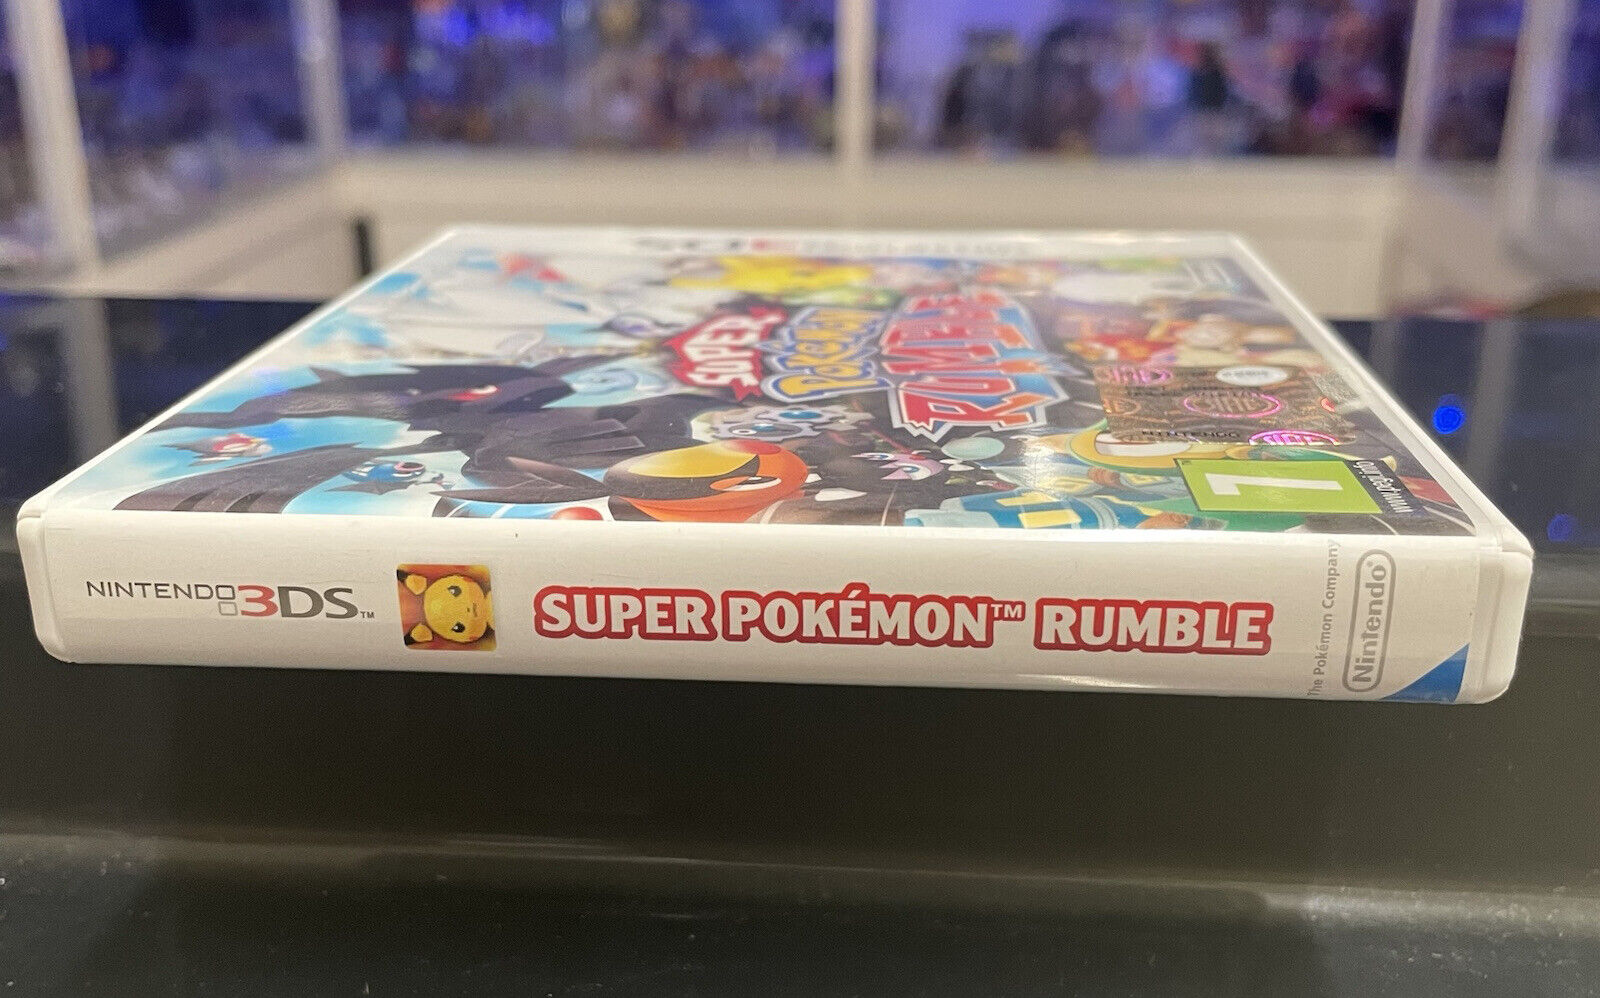 Nintendo-3DS-SUPER-POKEMON-RUMBLE-Pal-ita-134653301697-3